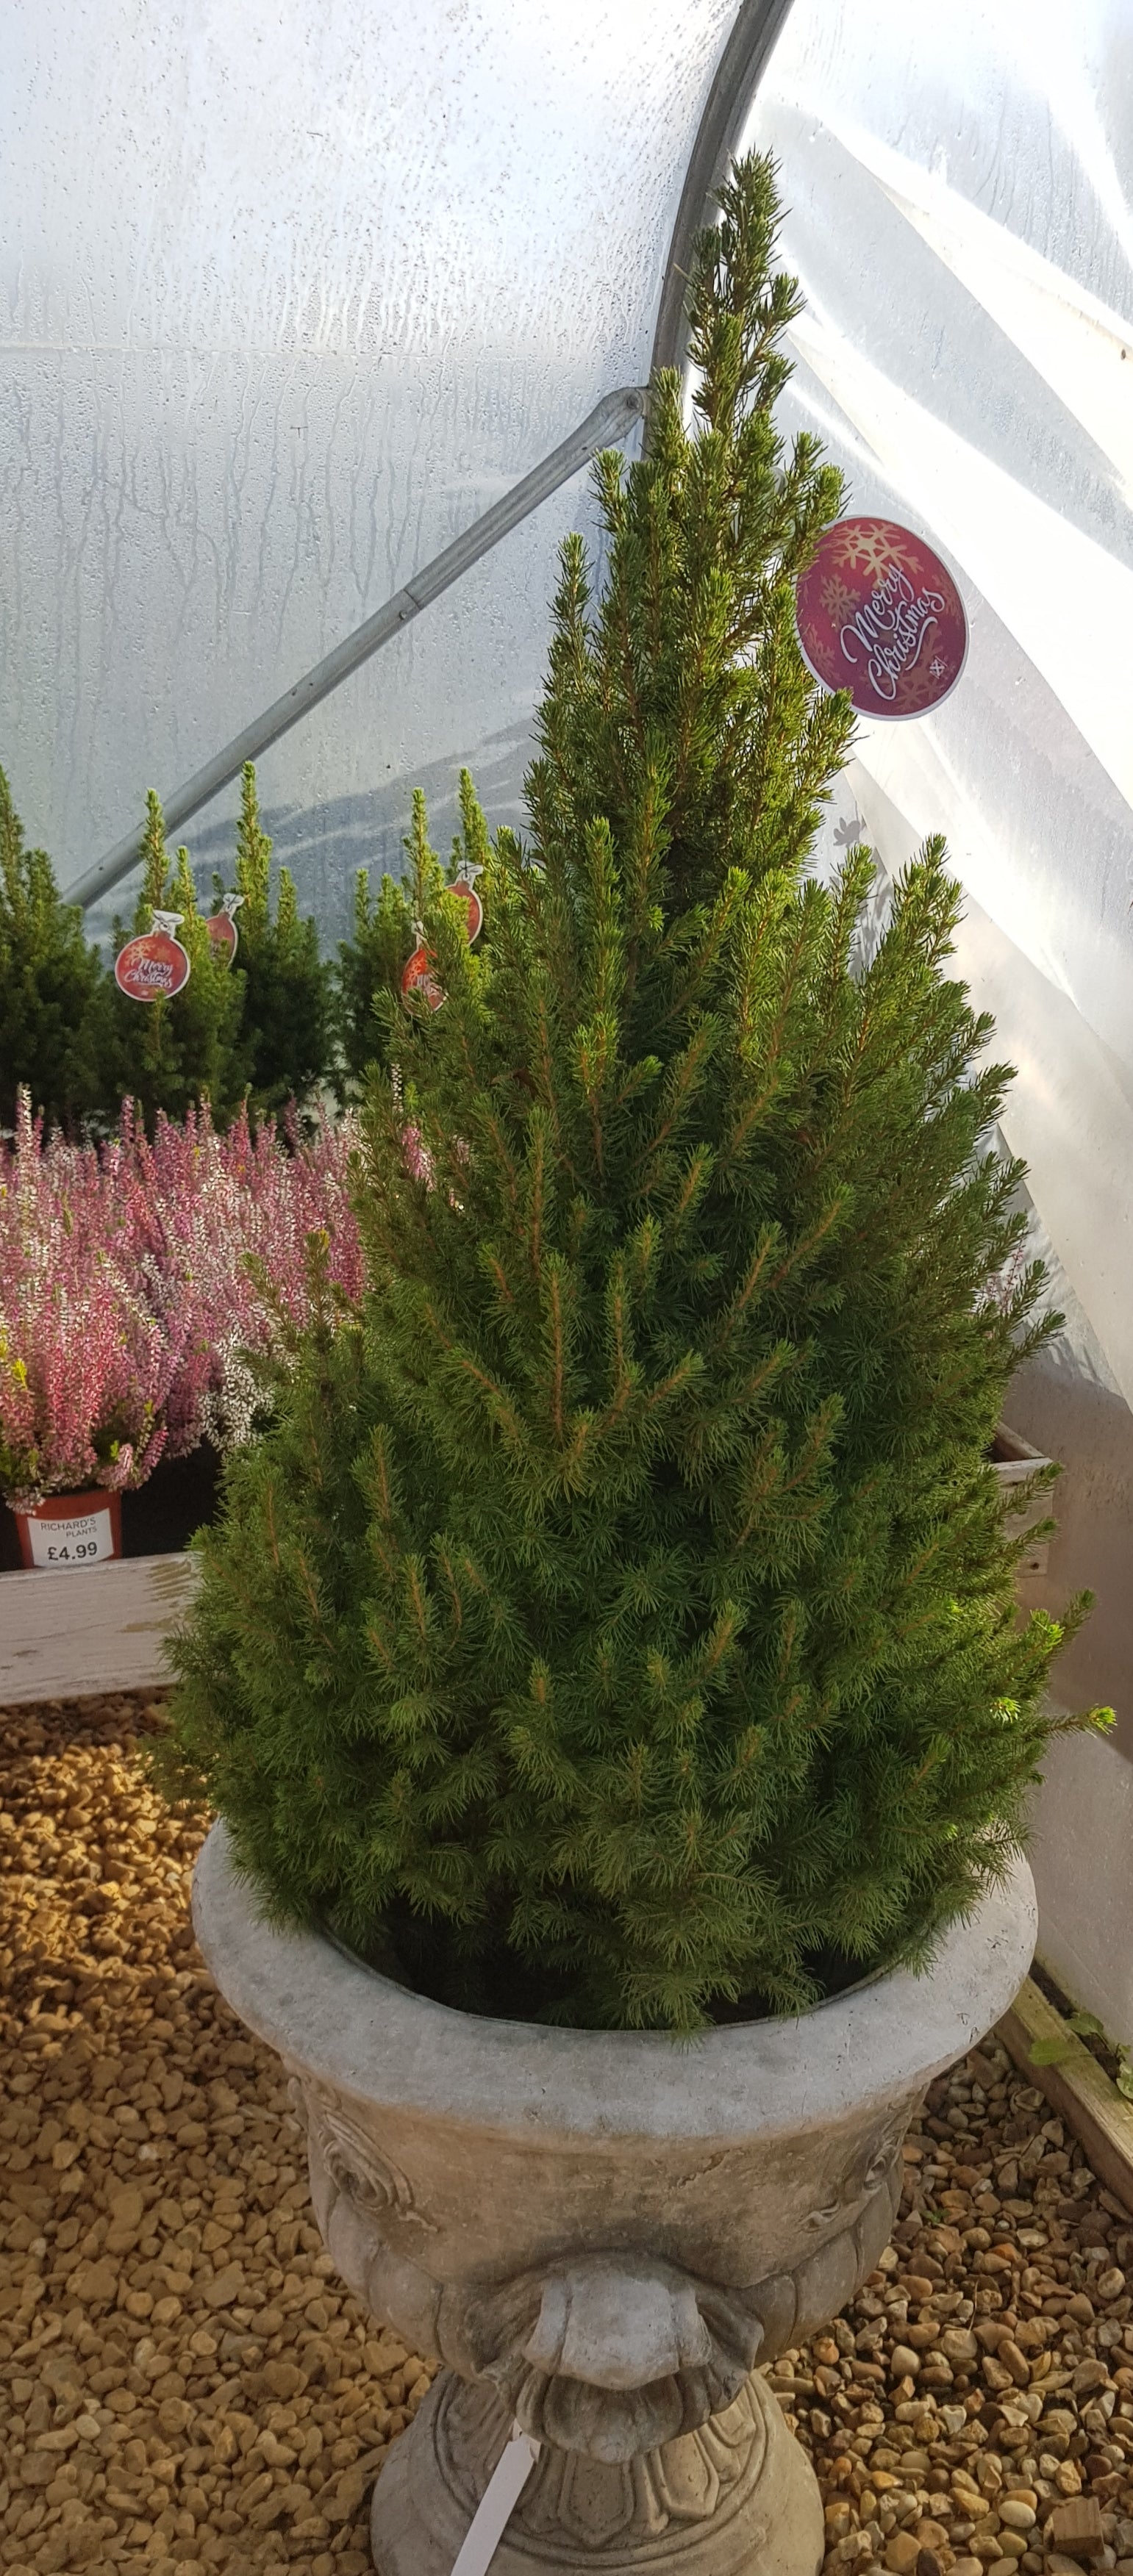 Pot grown Christmas Tree - Picea Glauca (White Spruce) - 120cm High inc pot